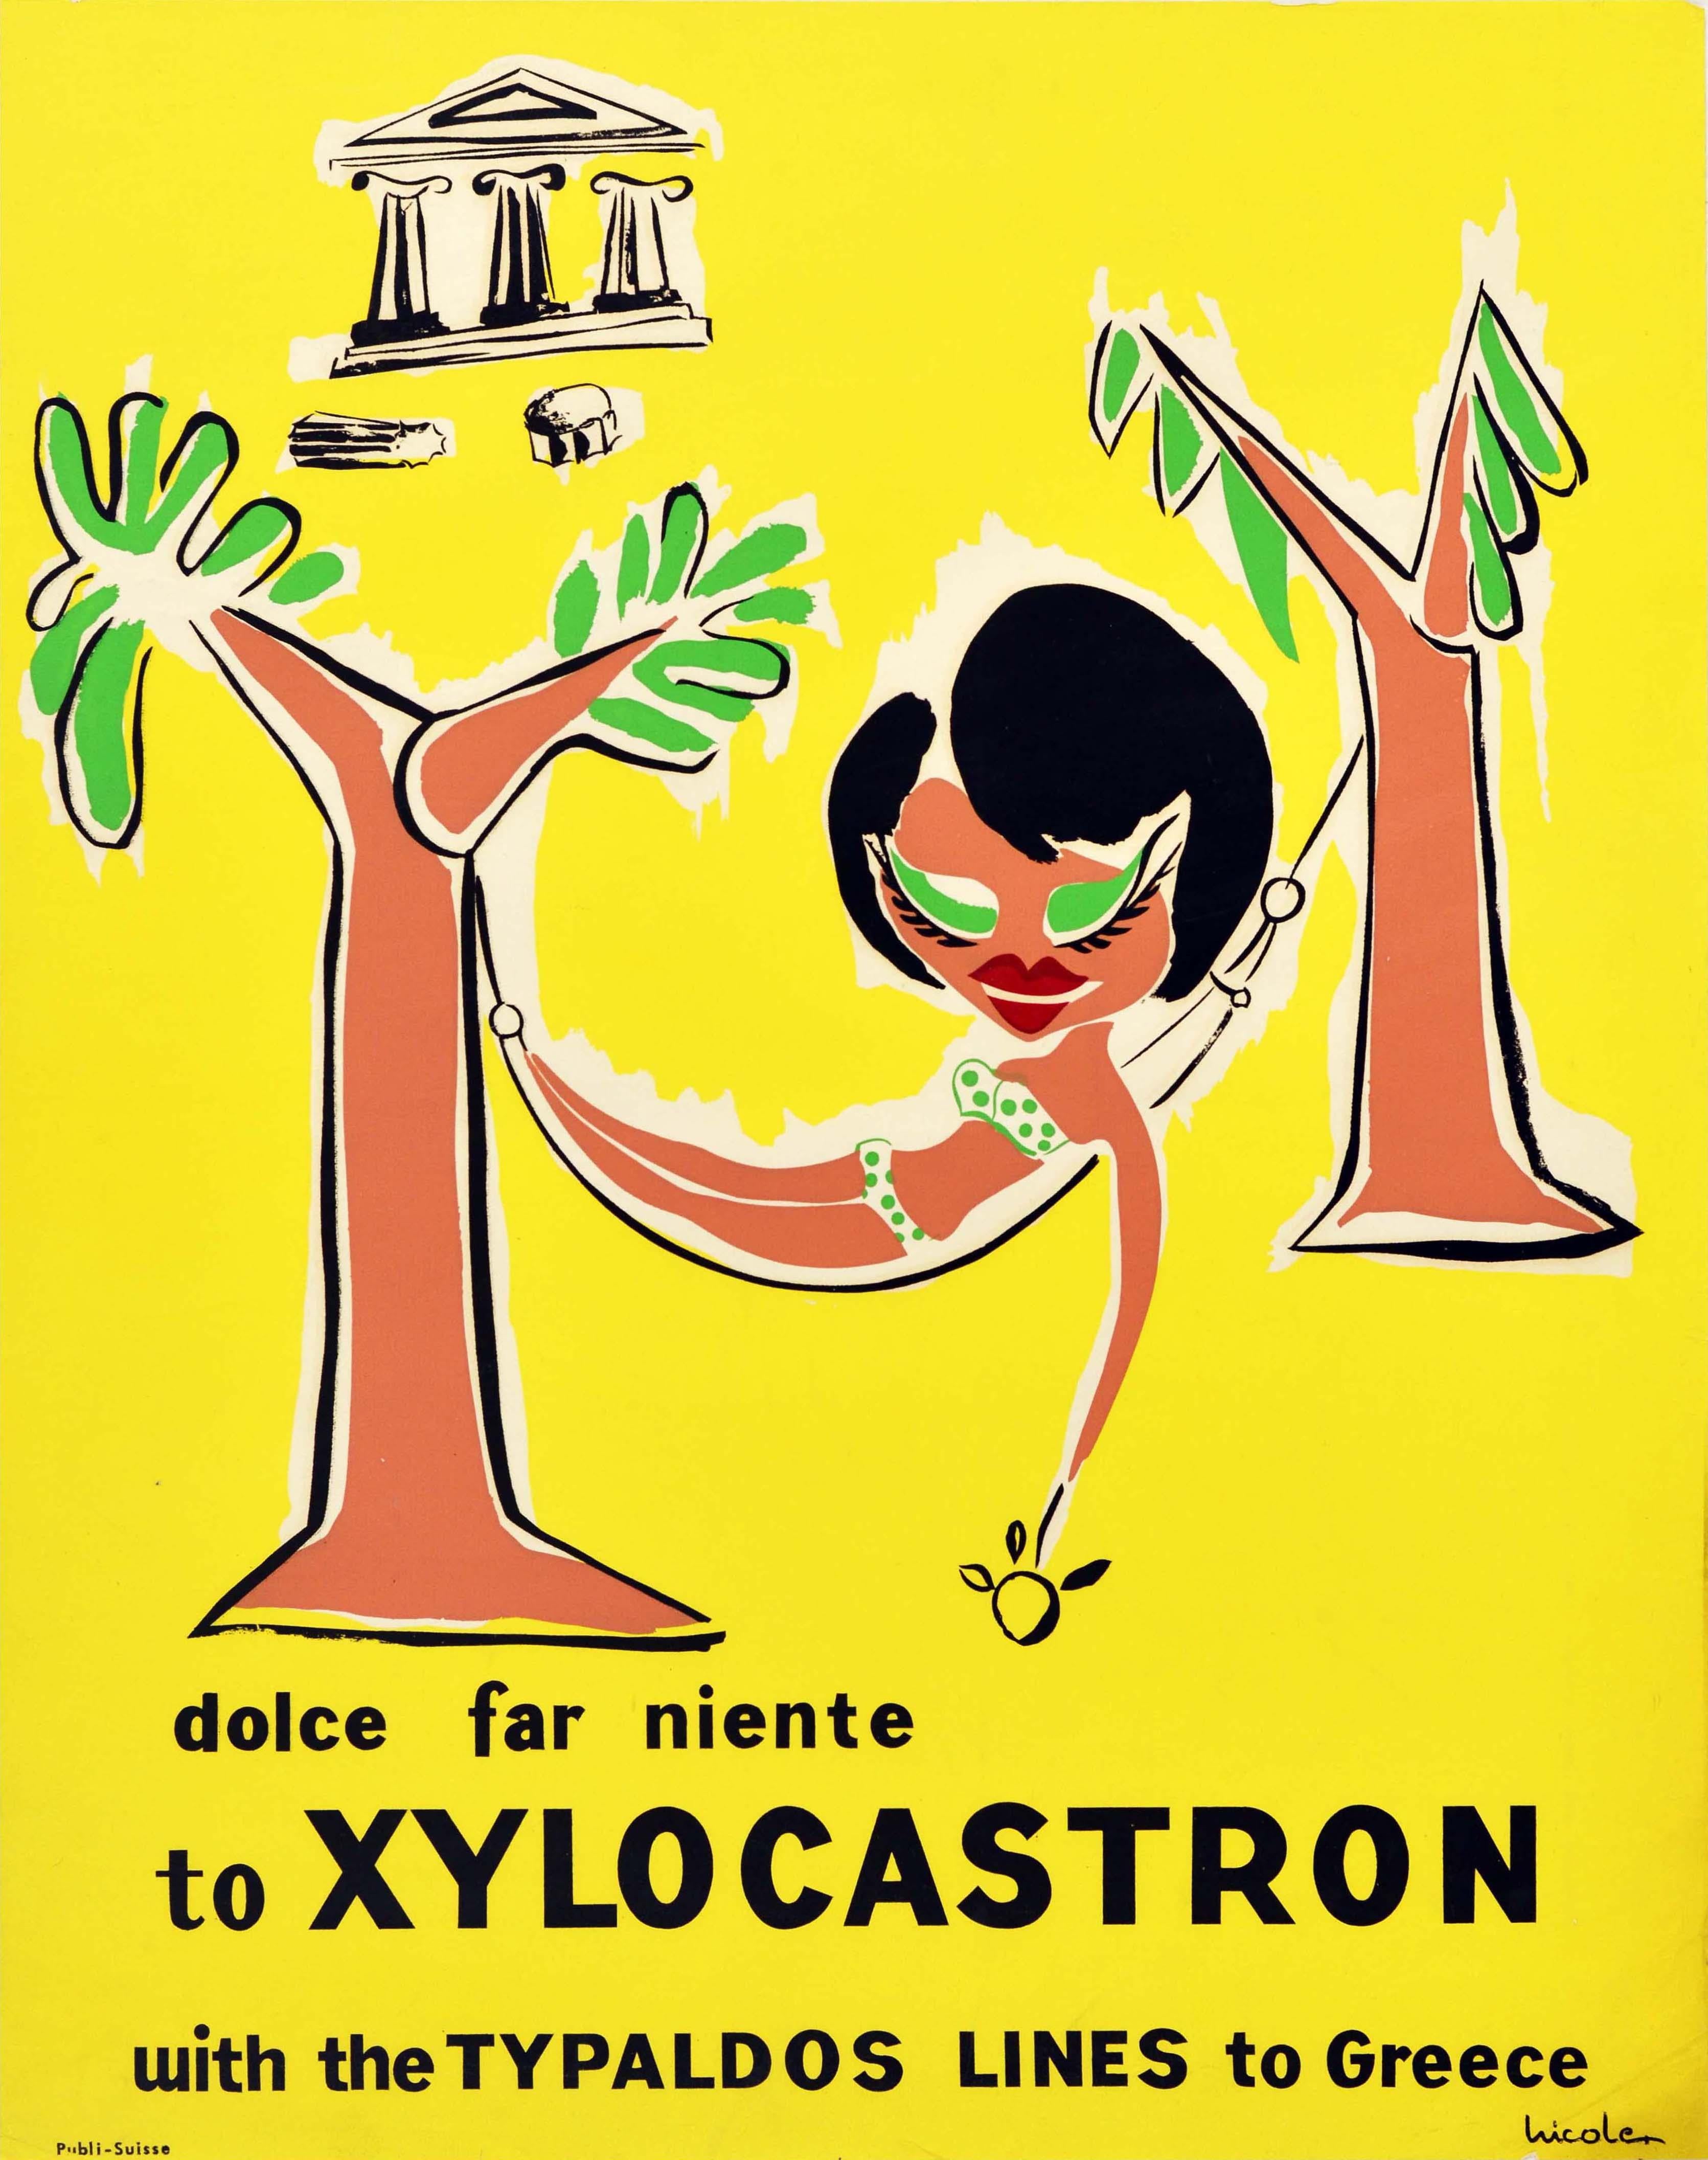 Unknown Print - Original Vintage Poster Xylocastron Greece Holiday Cruise Travel Typaldos Lines